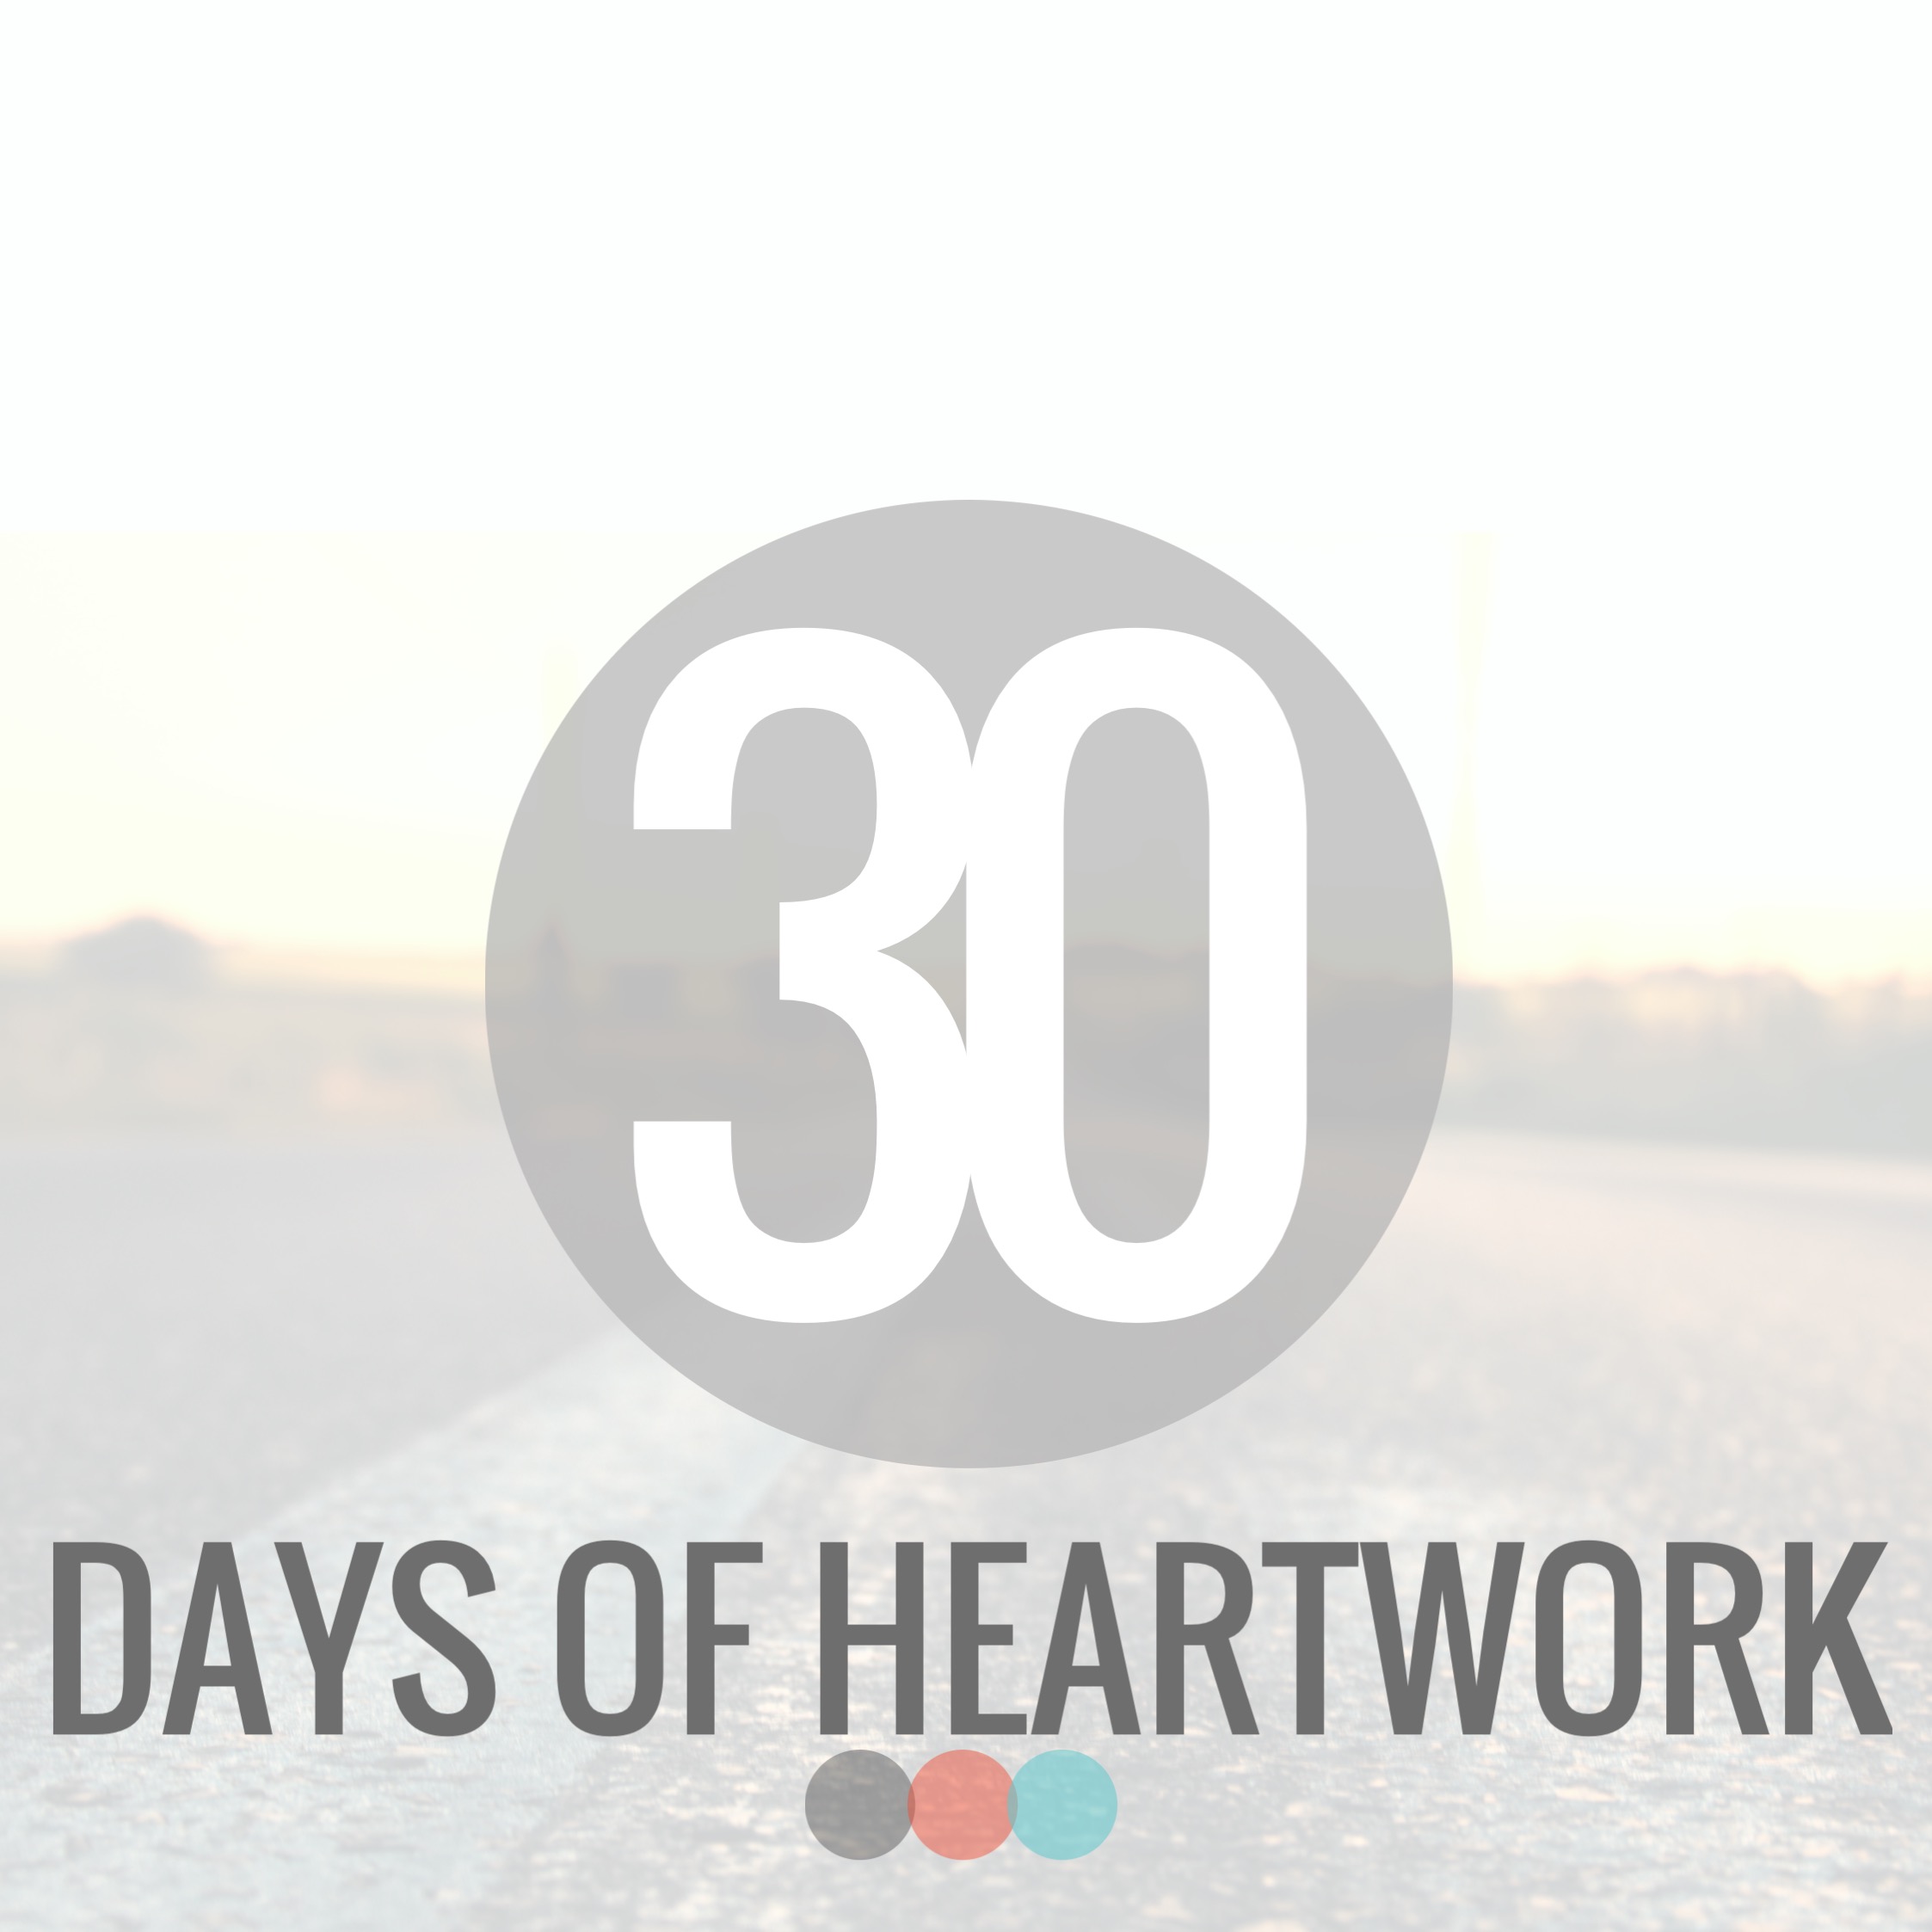 Heartwork – Part 3